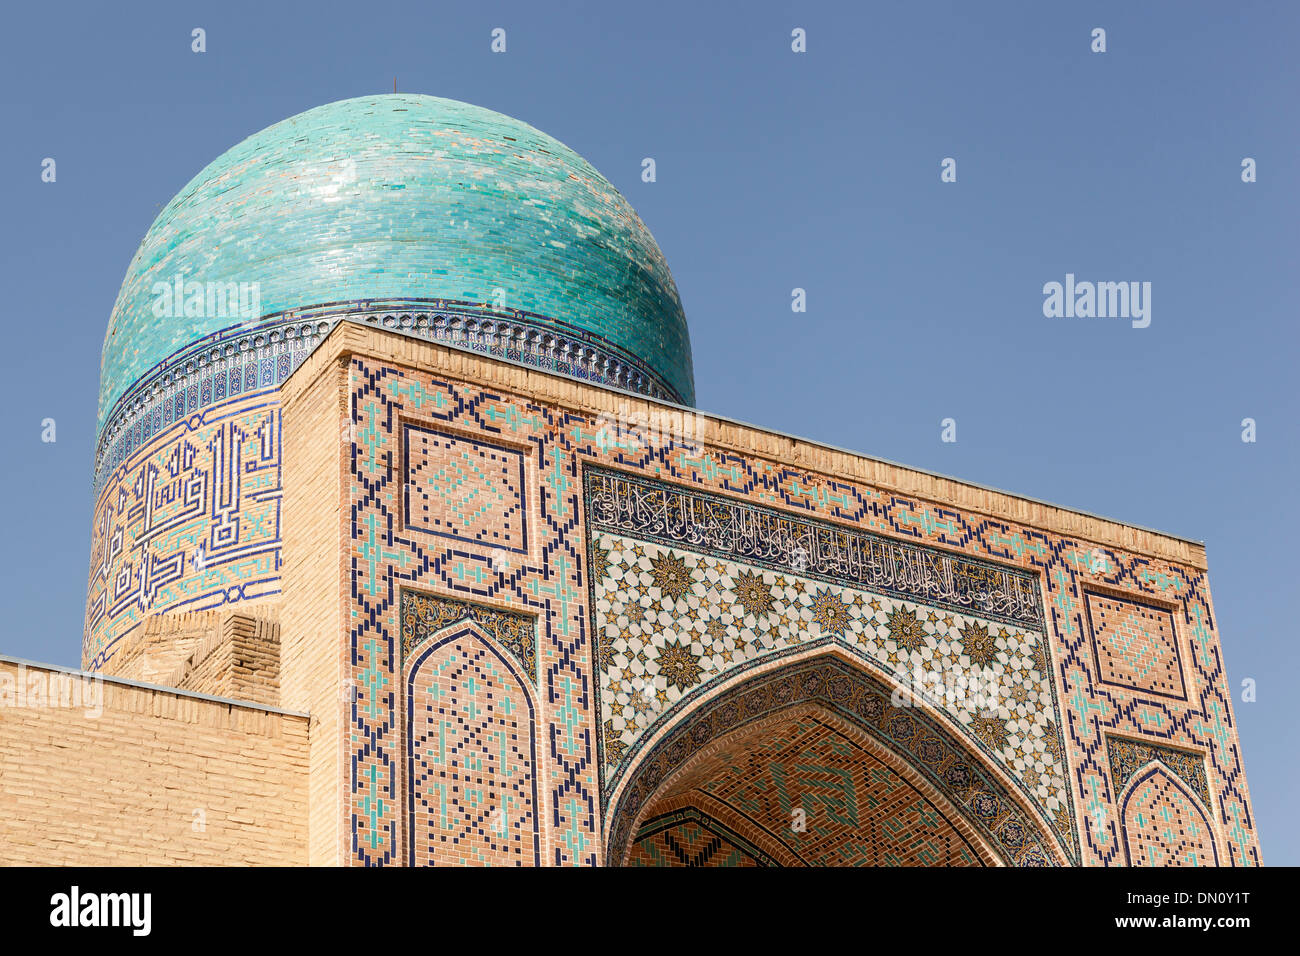 Double dome Mausoleum to Ulug Uljaoim, Shah-i-Zinda, also known as Shah I Zinda and Shah-i Zinda, Samarkand, Uzbekistan Stock Photo